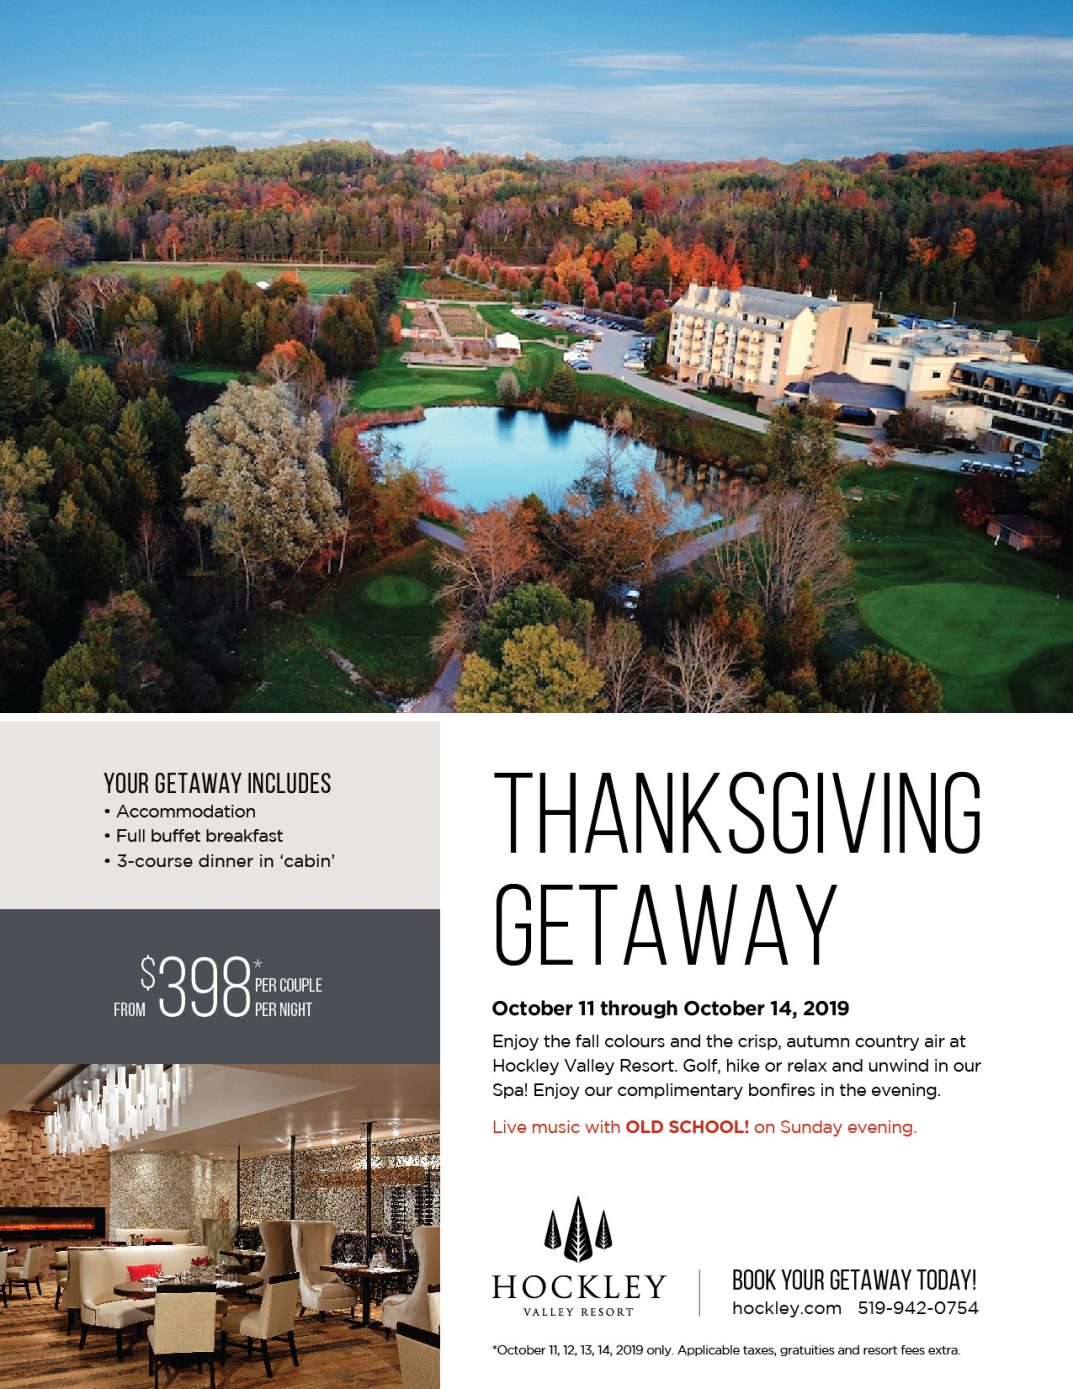 Thanksgiving Getaway - Hockley Valley Resort